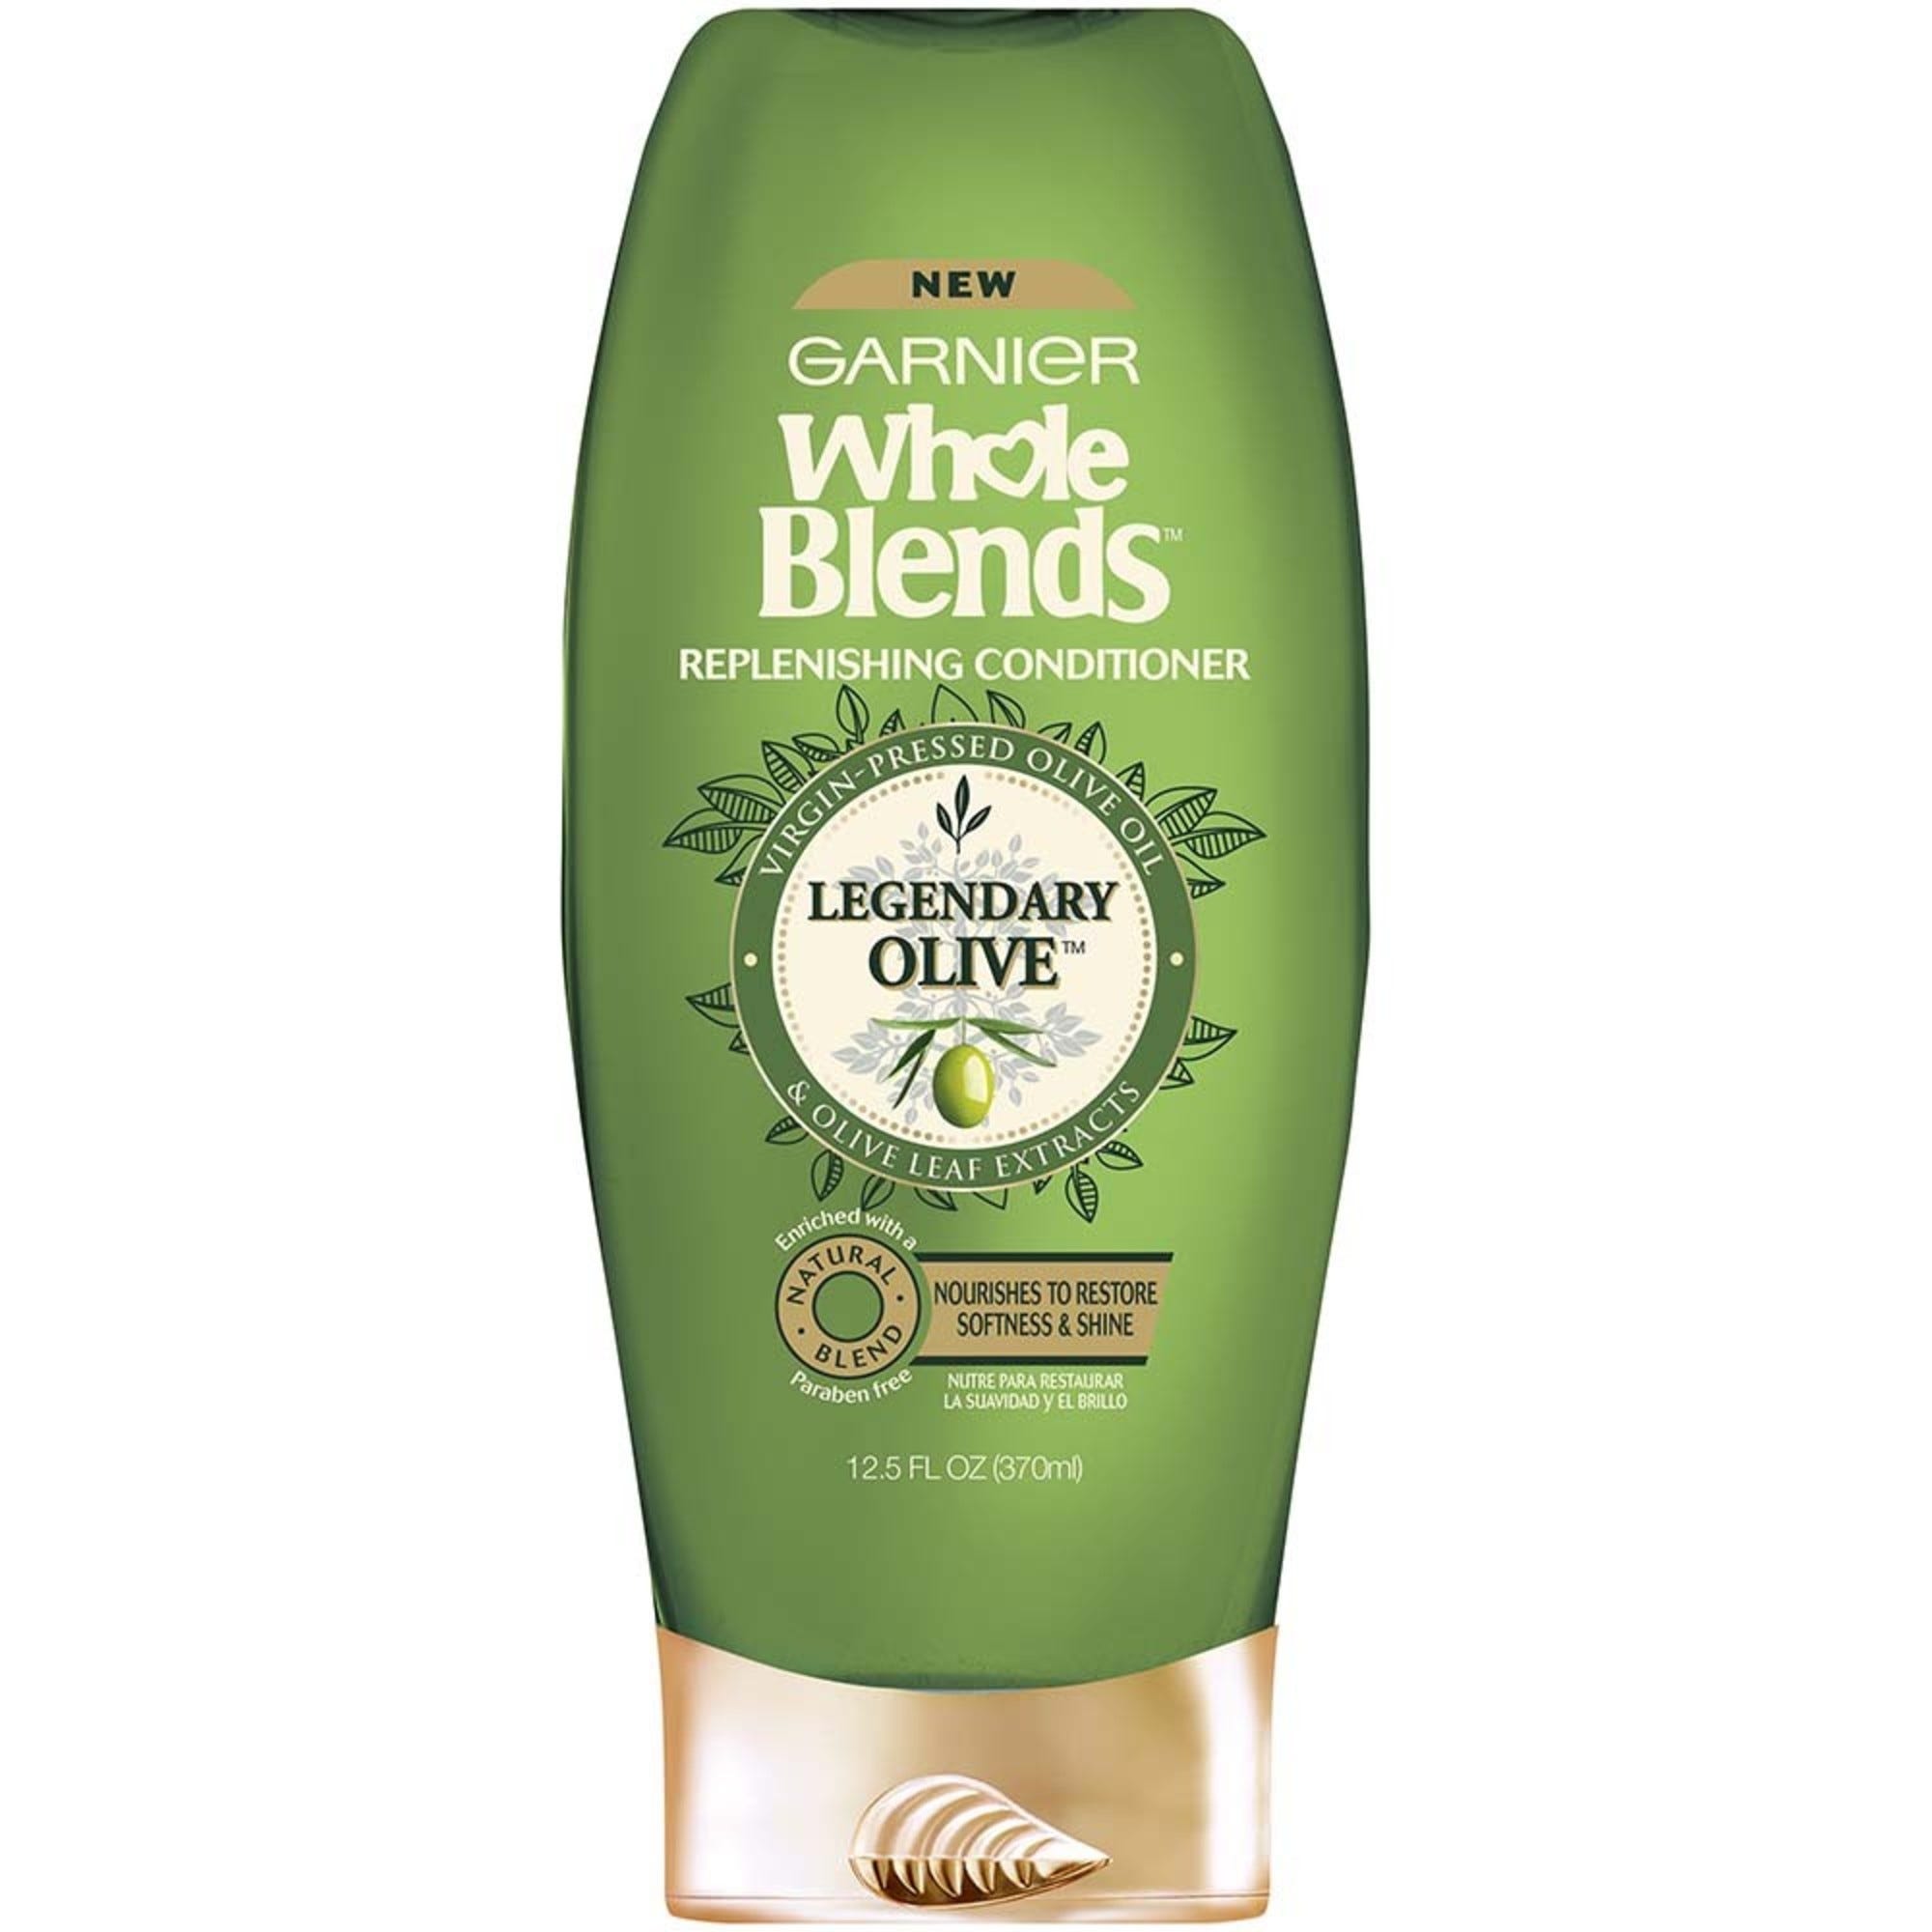 Whole Blends Replenishing Conditioner, Virgin-Pressed Olive Oil & Olive Leaf Extracts - 12.5 fl oz